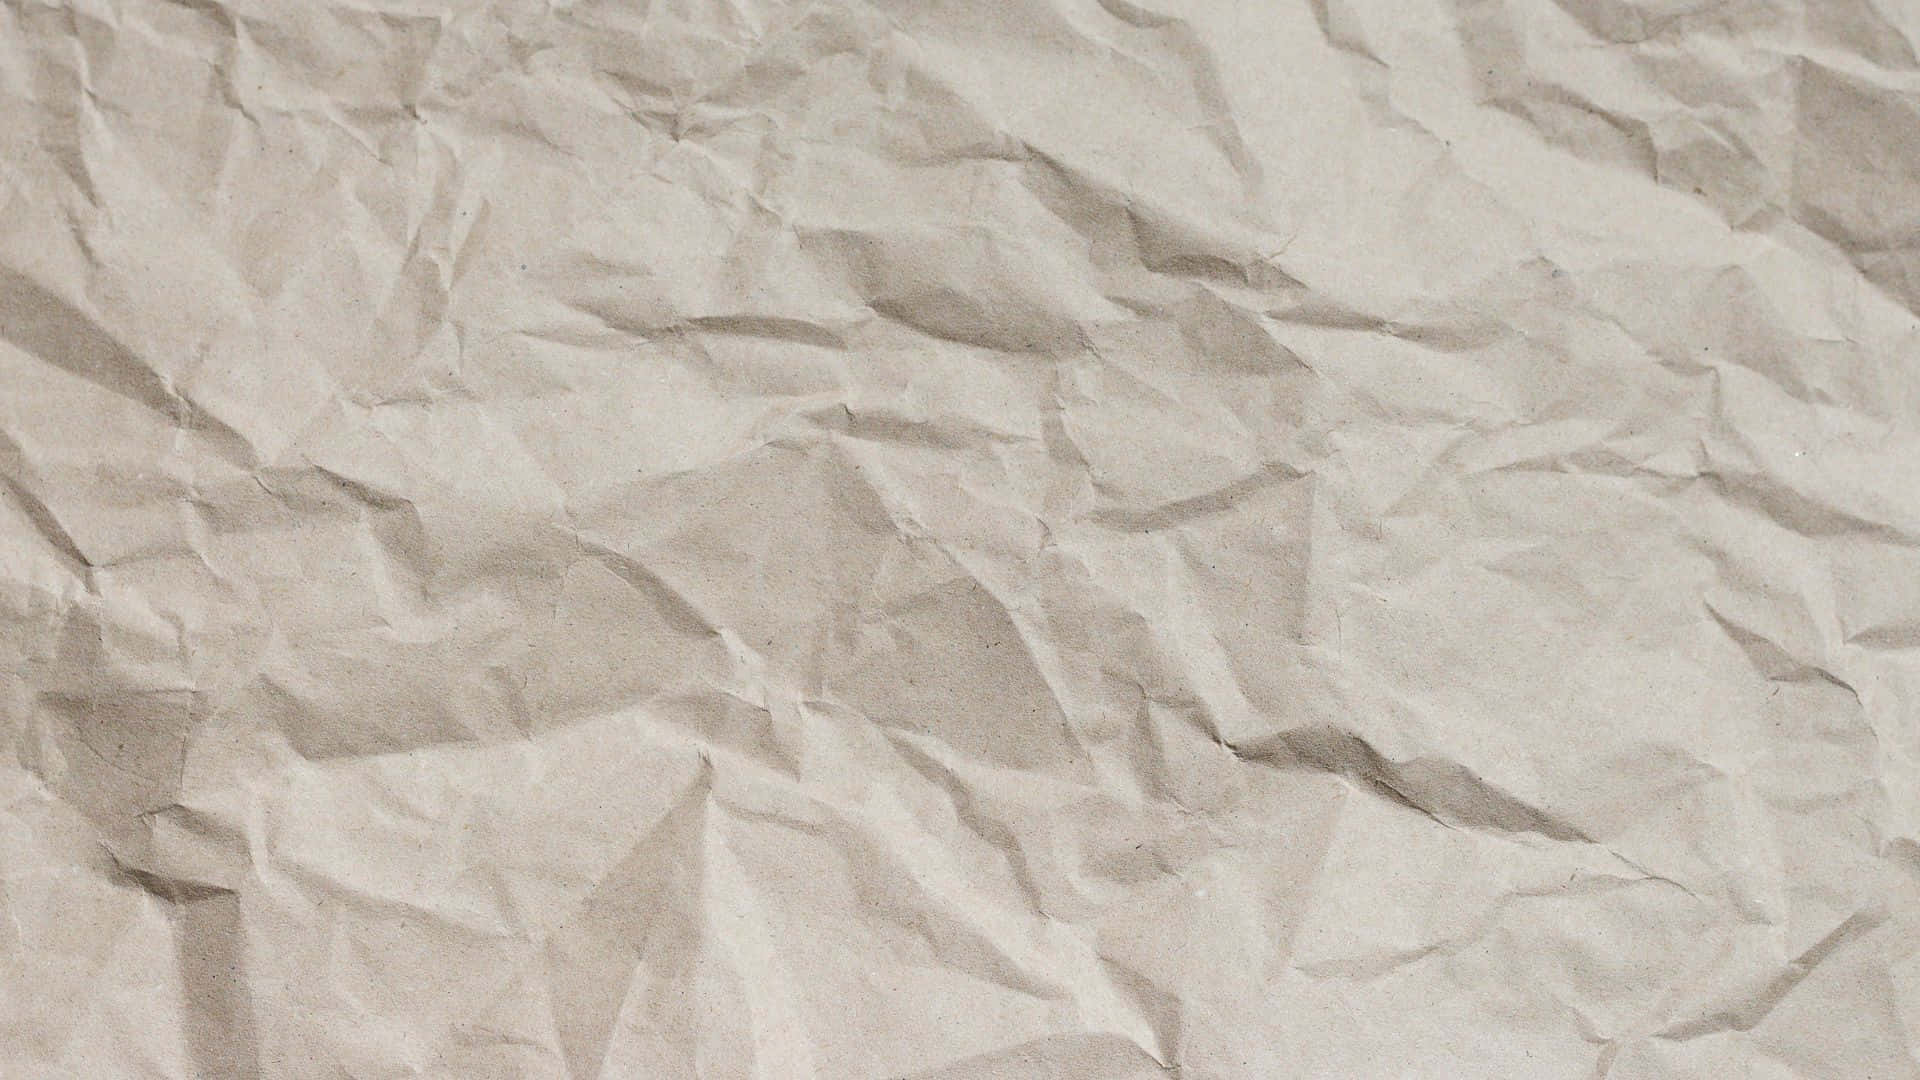 A Close Up Of A Crumpled Paper